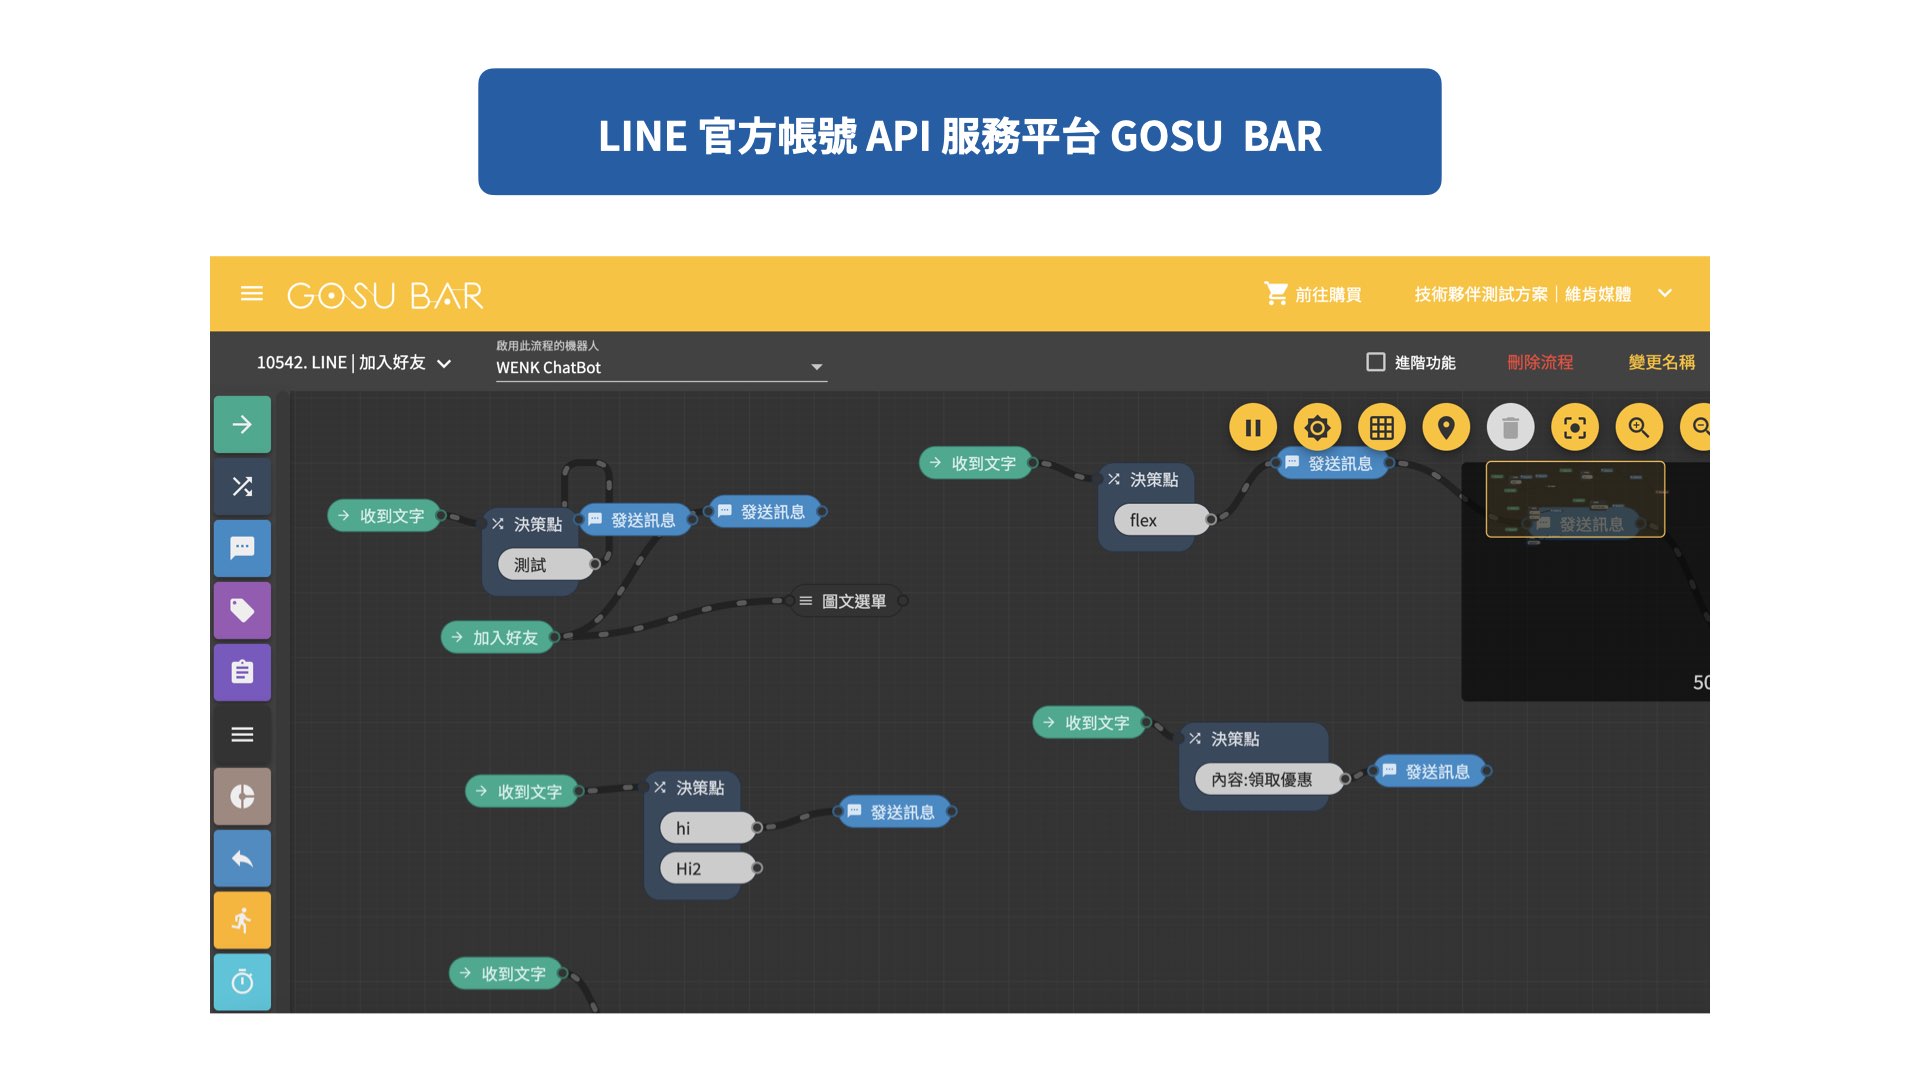 LINE官方帳號API 服務平台 GOSU BAR 